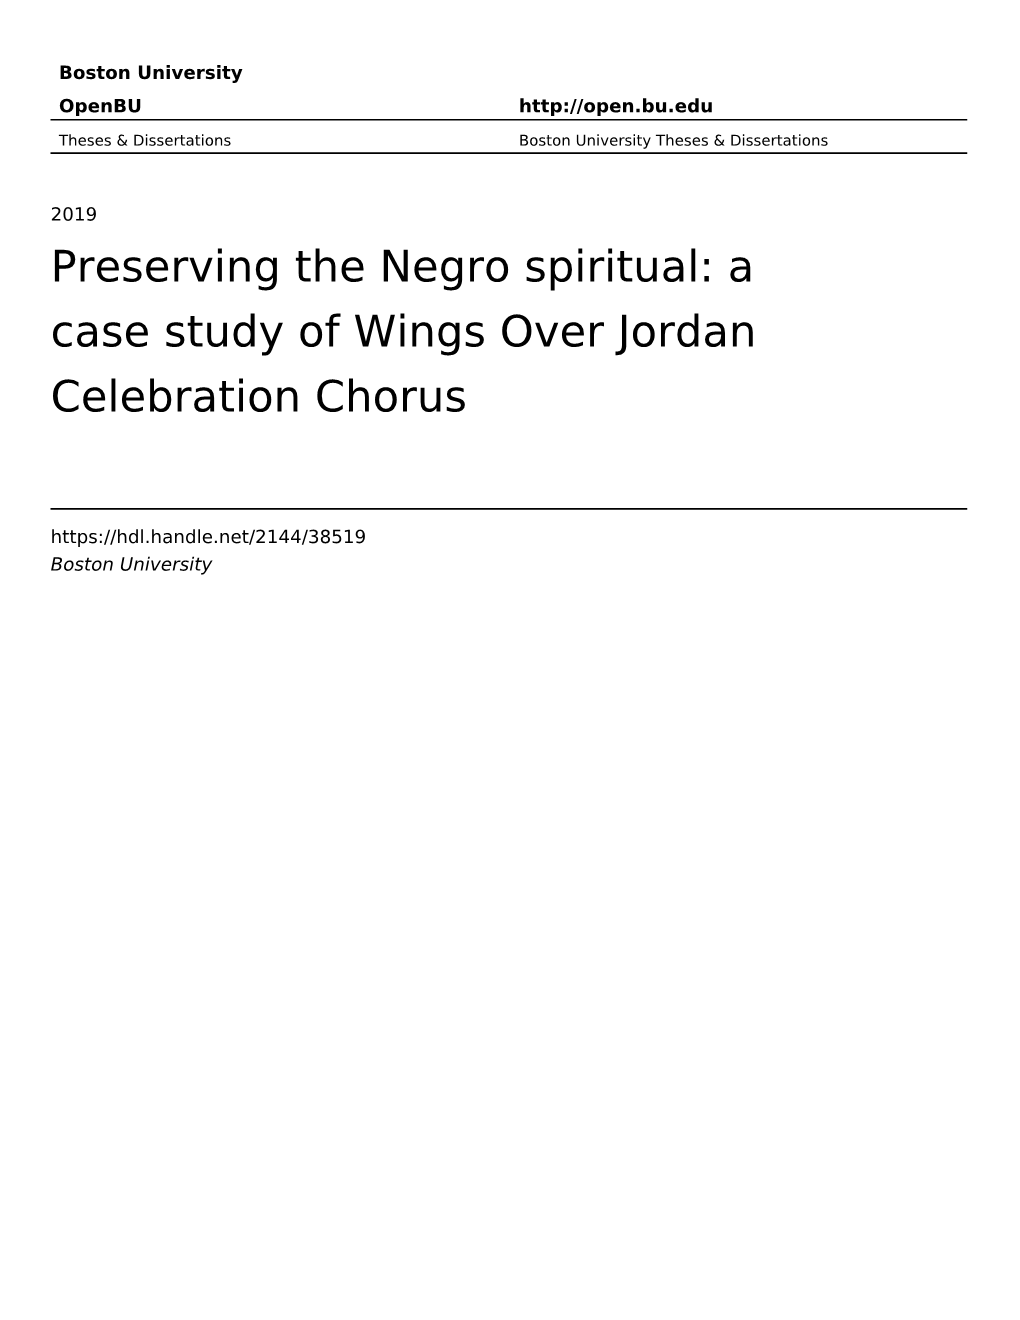 A Case Study of Wings Over Jordan Celebration Chorus